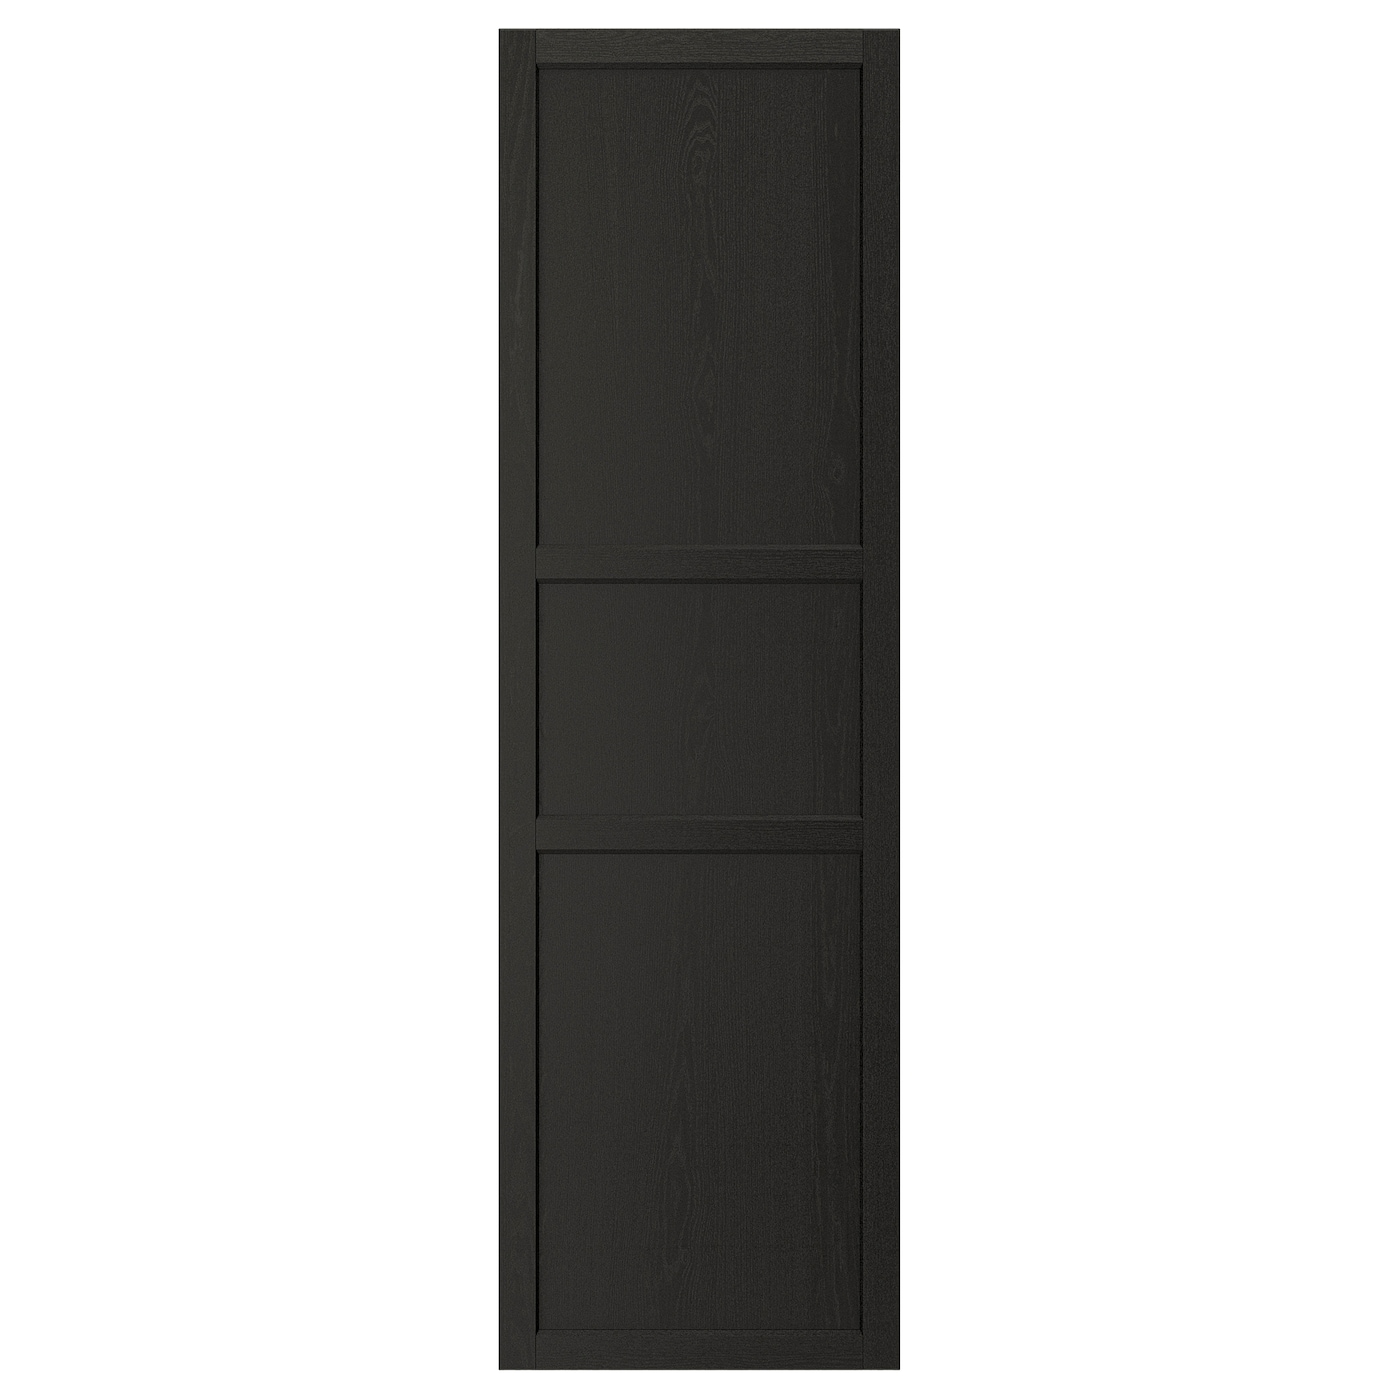 Фасад - IKEA LERHYTTAN, 200х60 см, черный, ЛЕРХЮТТАН ИКЕА